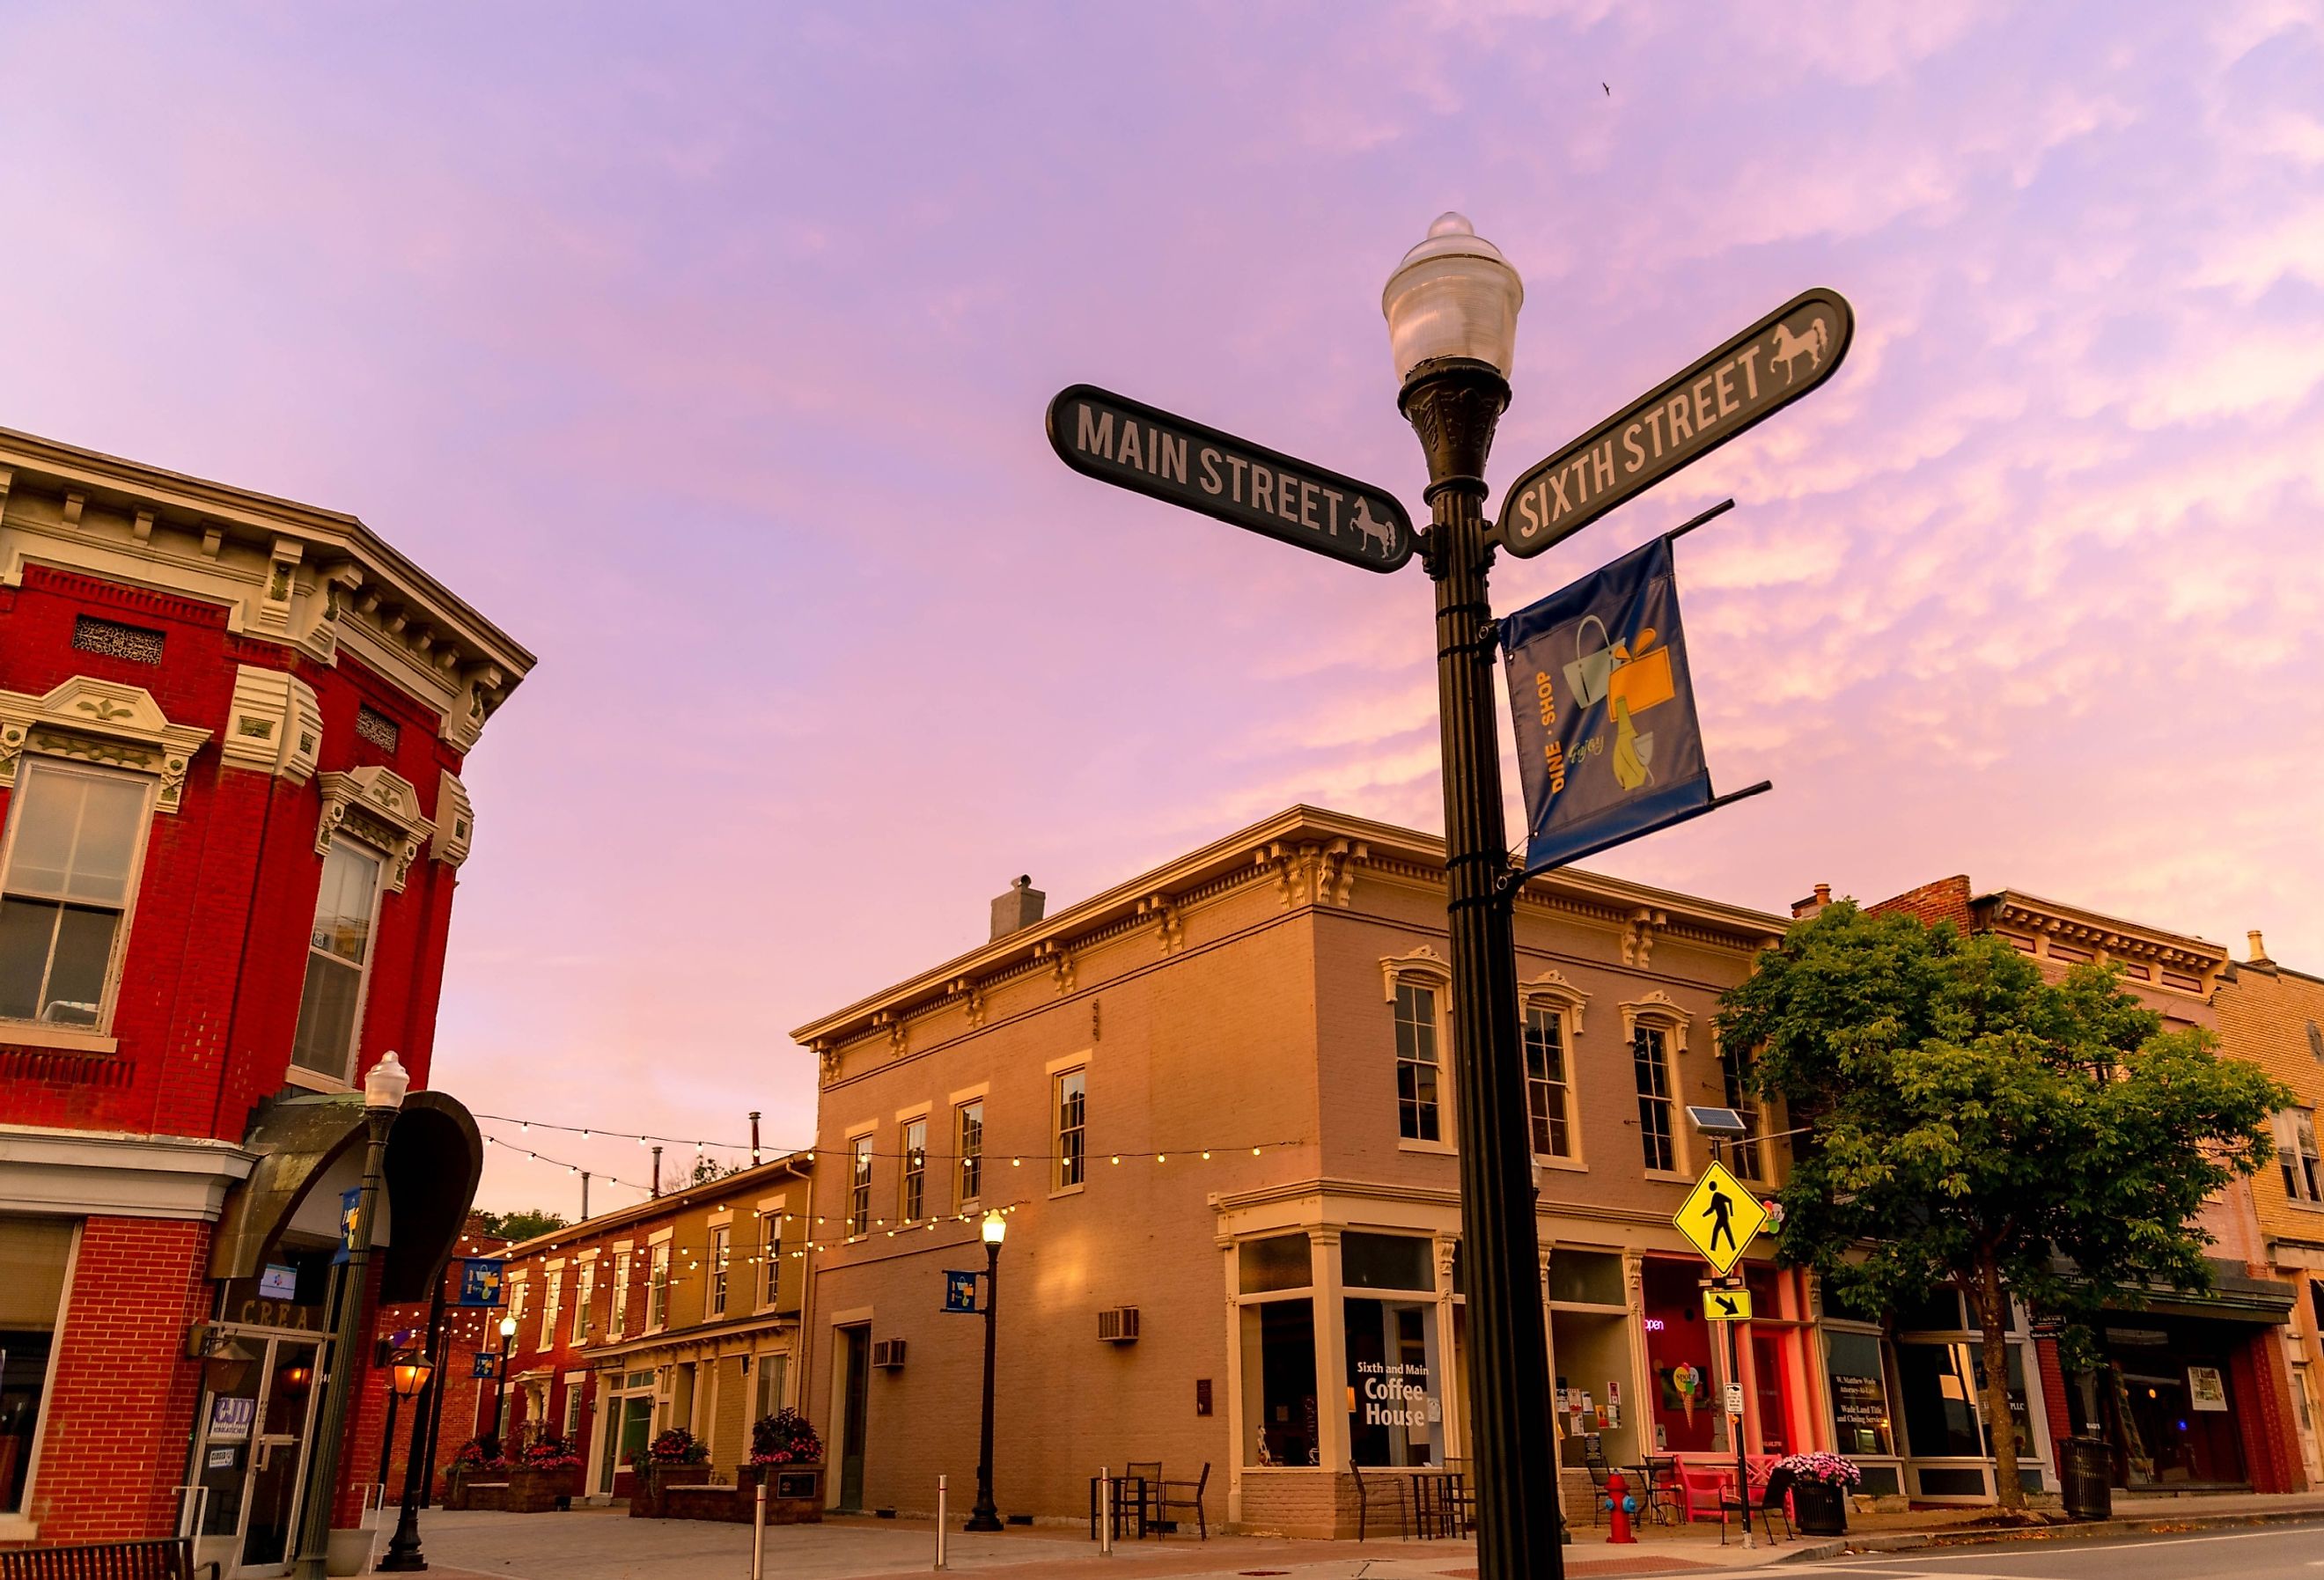 Downtown Shelbyville, Kentucky. Image credit Blue Meta via Shutterstock